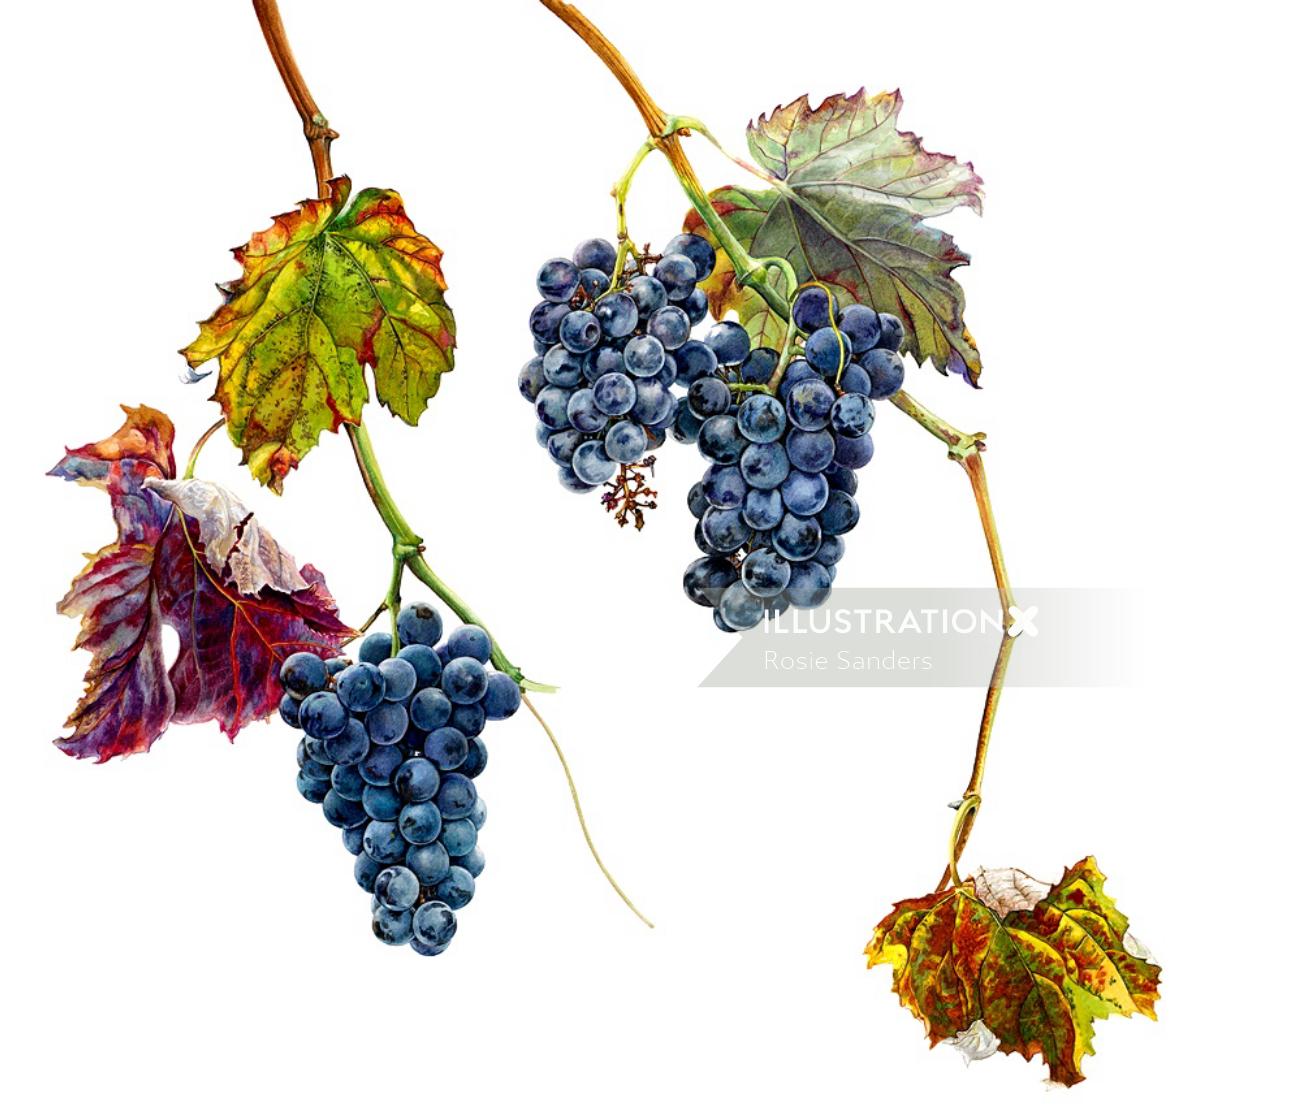 Vin de raisin portugais - une illustration de Rosie Sanders